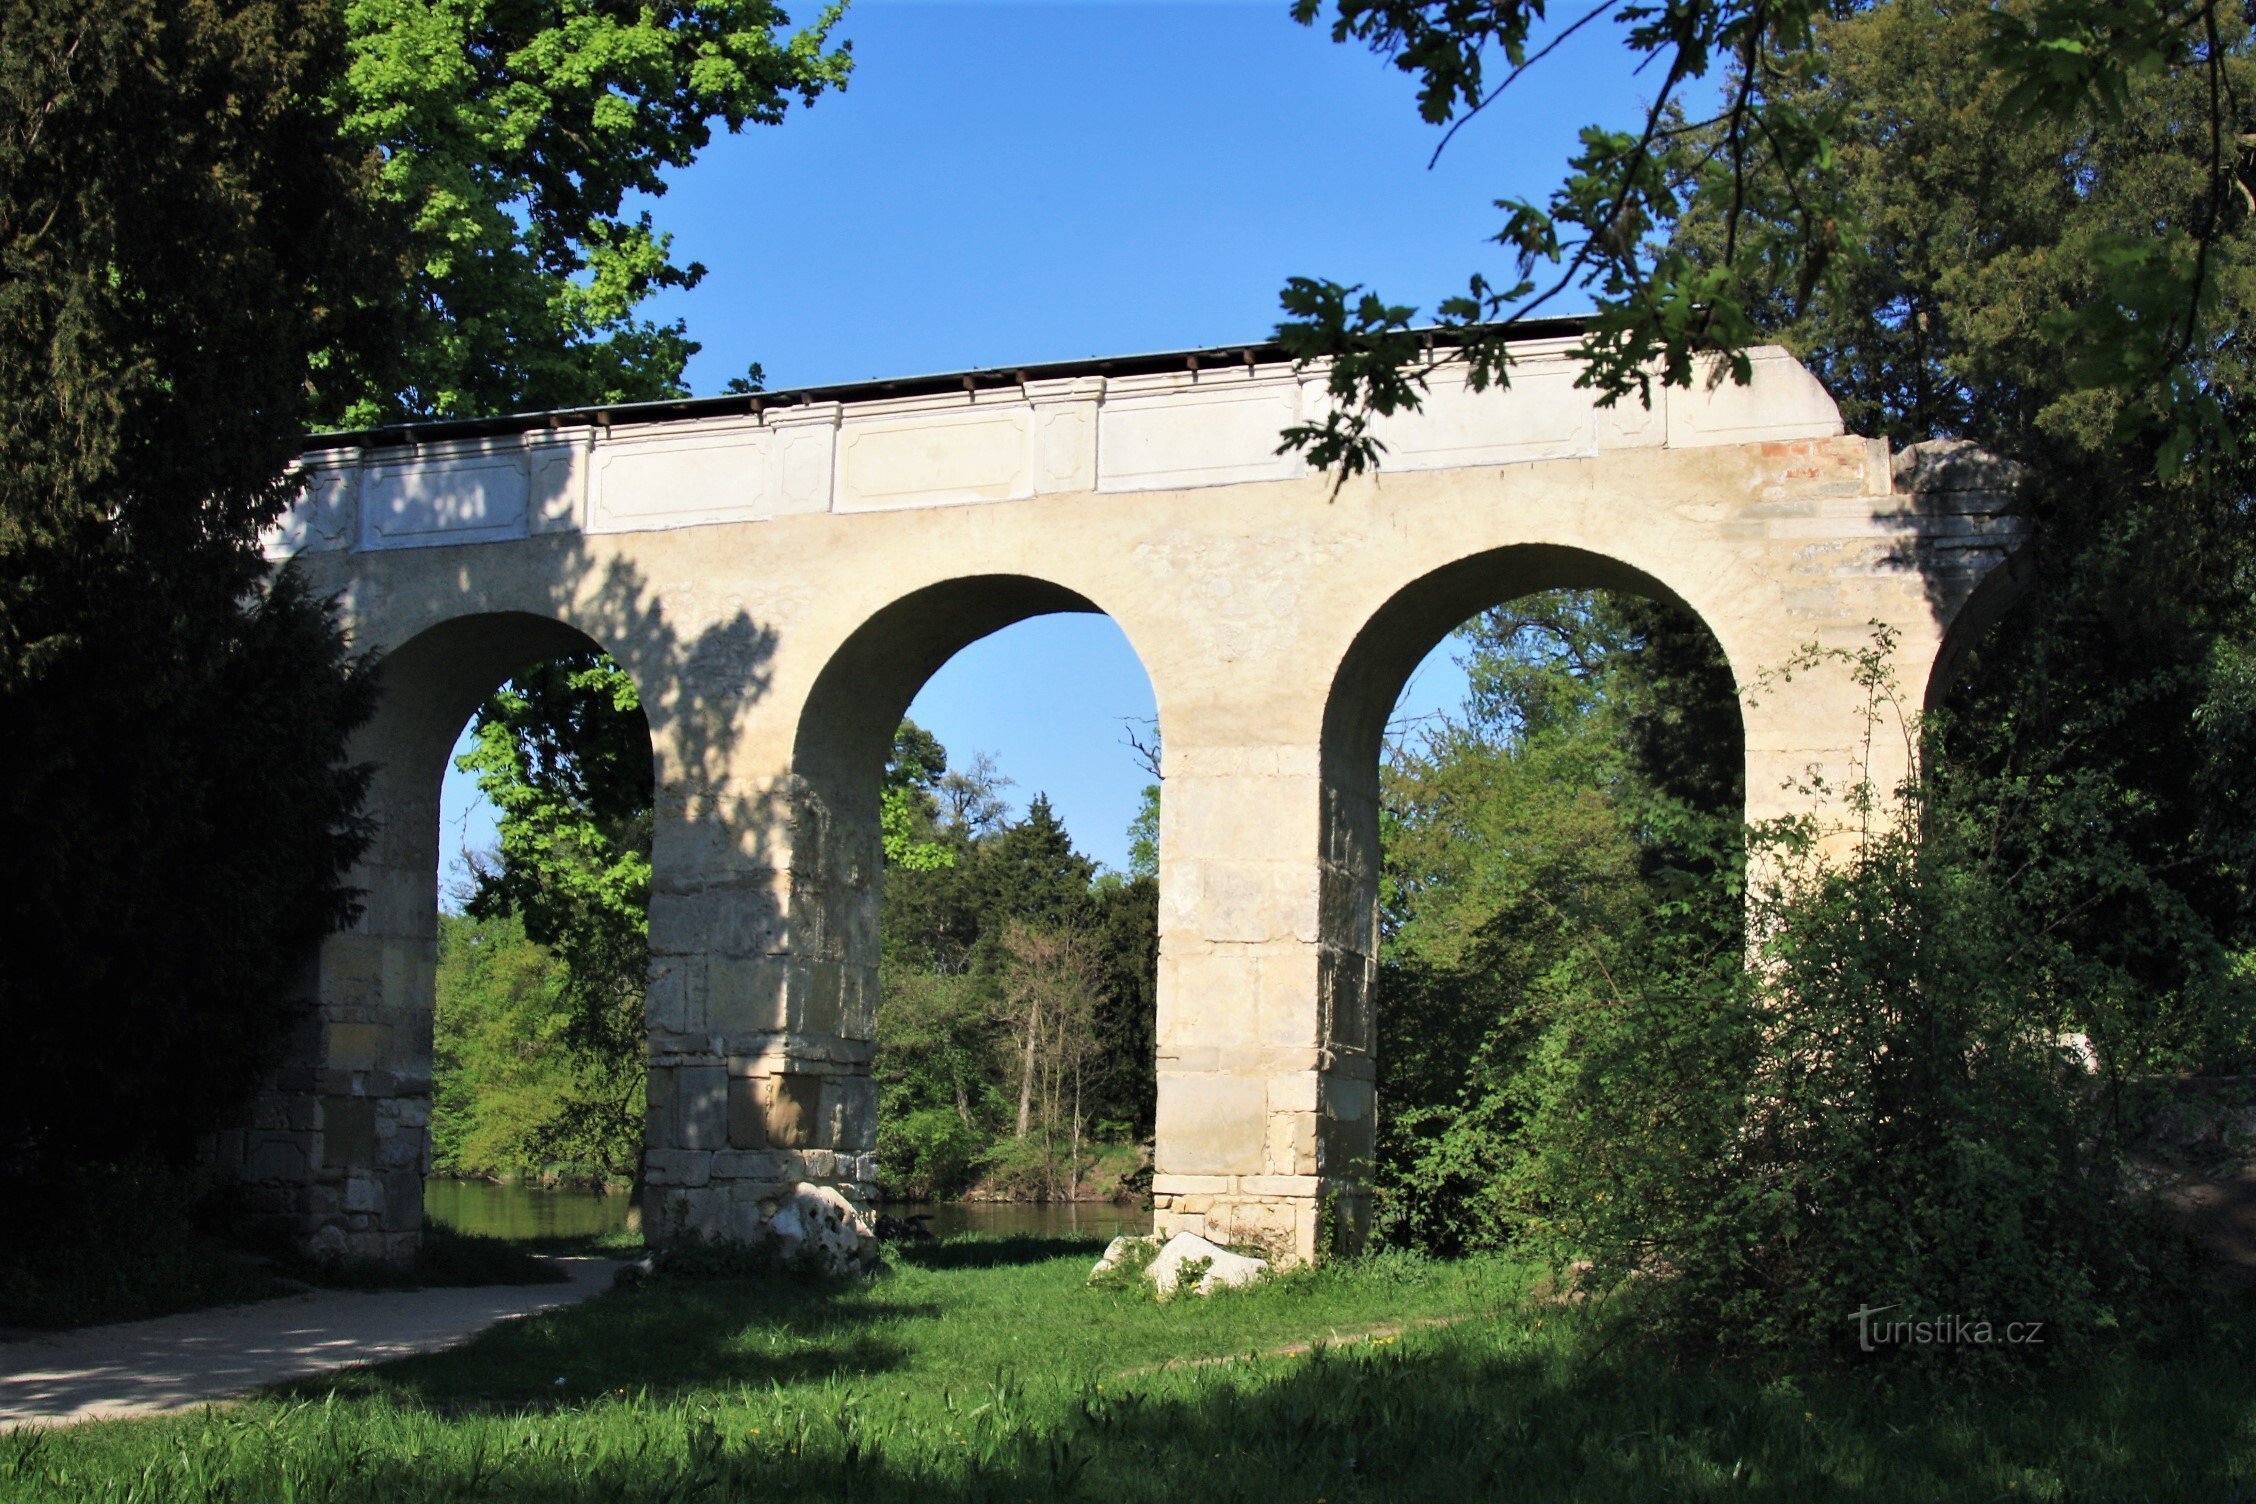 Aquaduct van Lednice